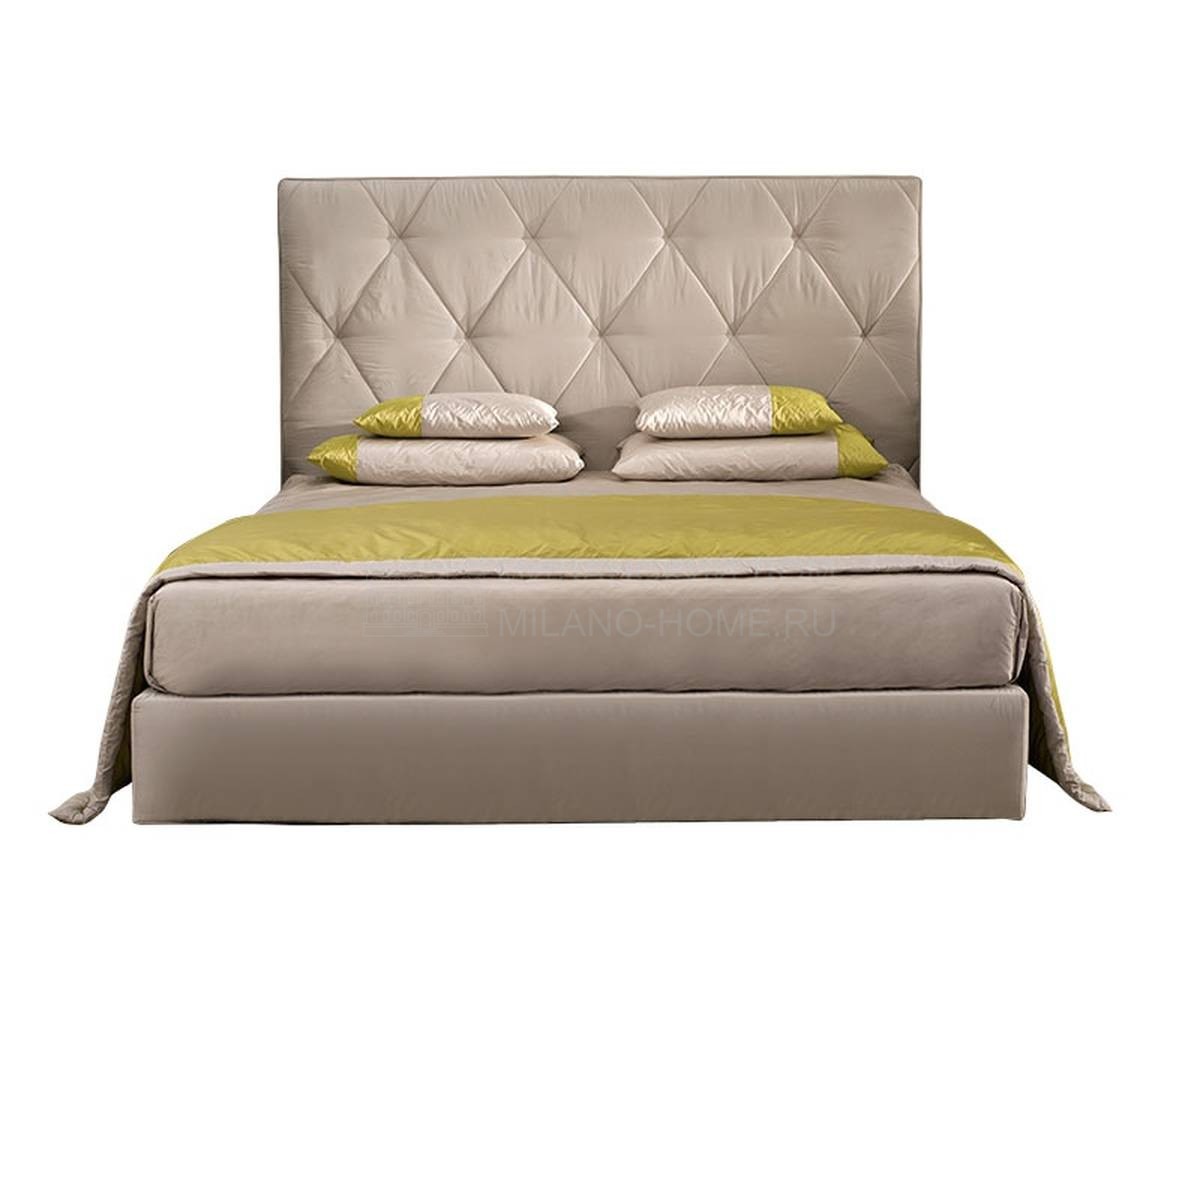 Кровать с мягким изголовьем Coco/ bed из Италии фабрики SOFTHOUSE